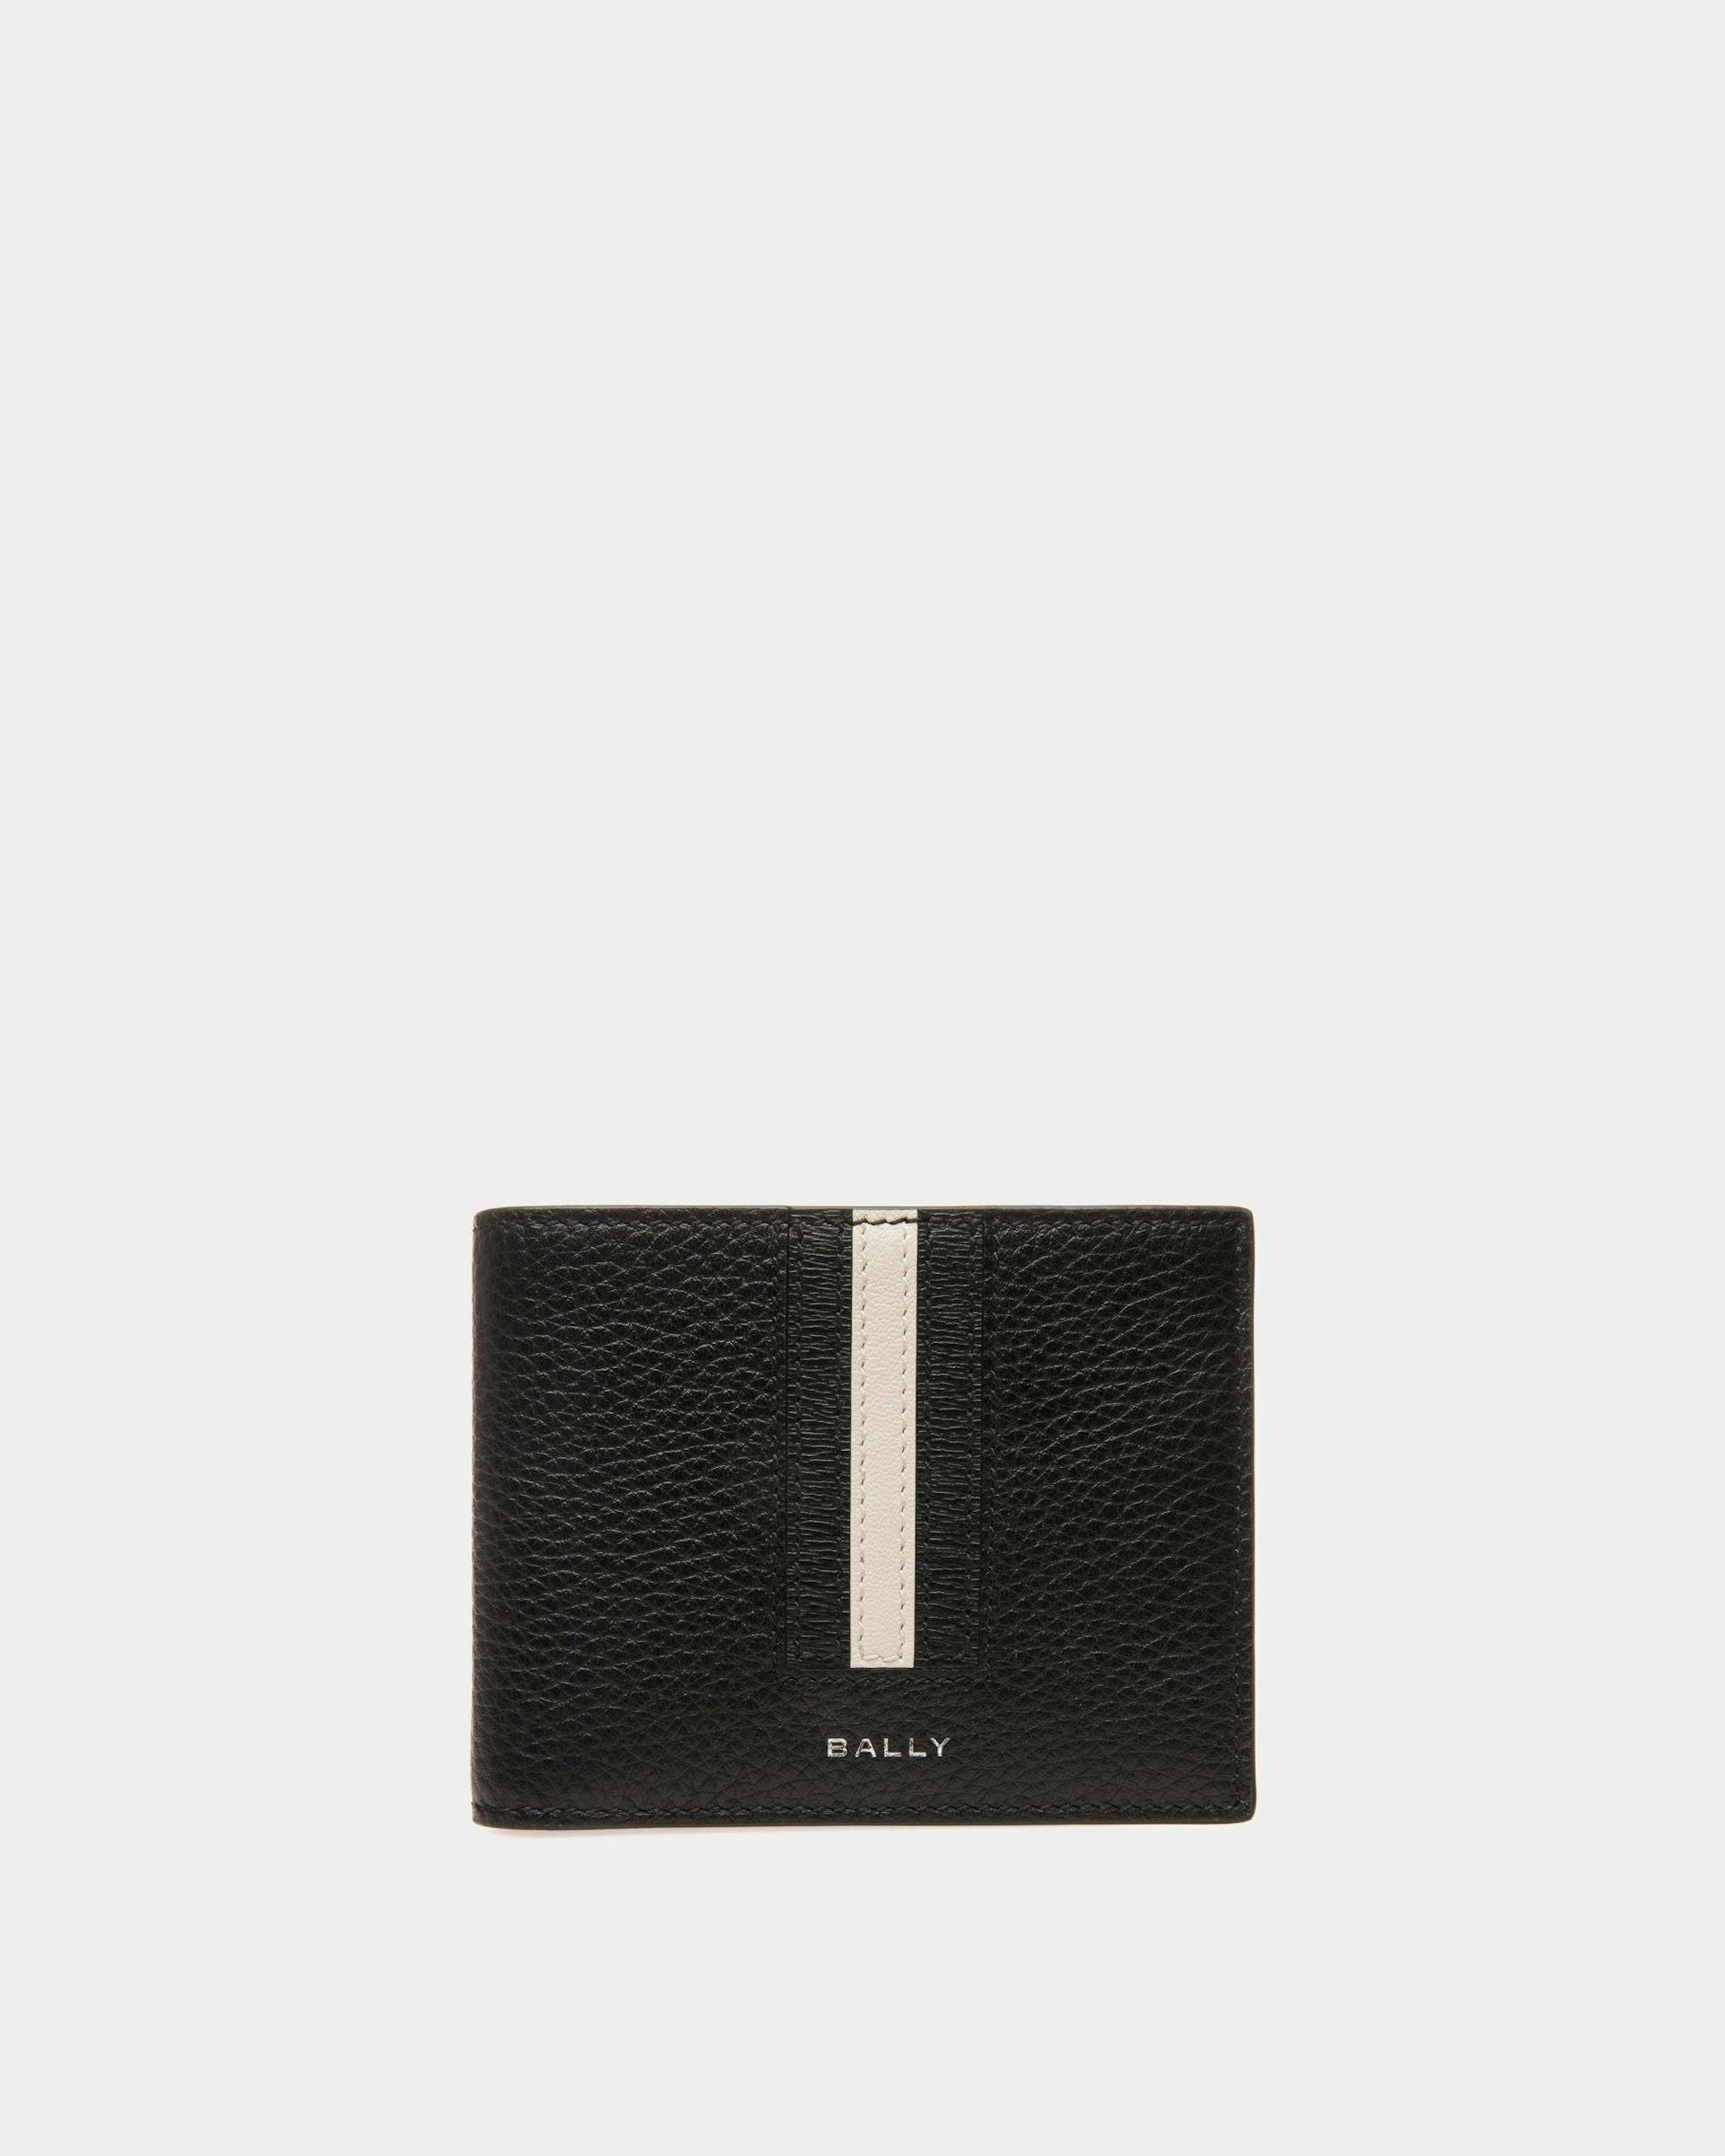 Men's Ribbon Wallet In Black Leather | Bally | Still Life Front